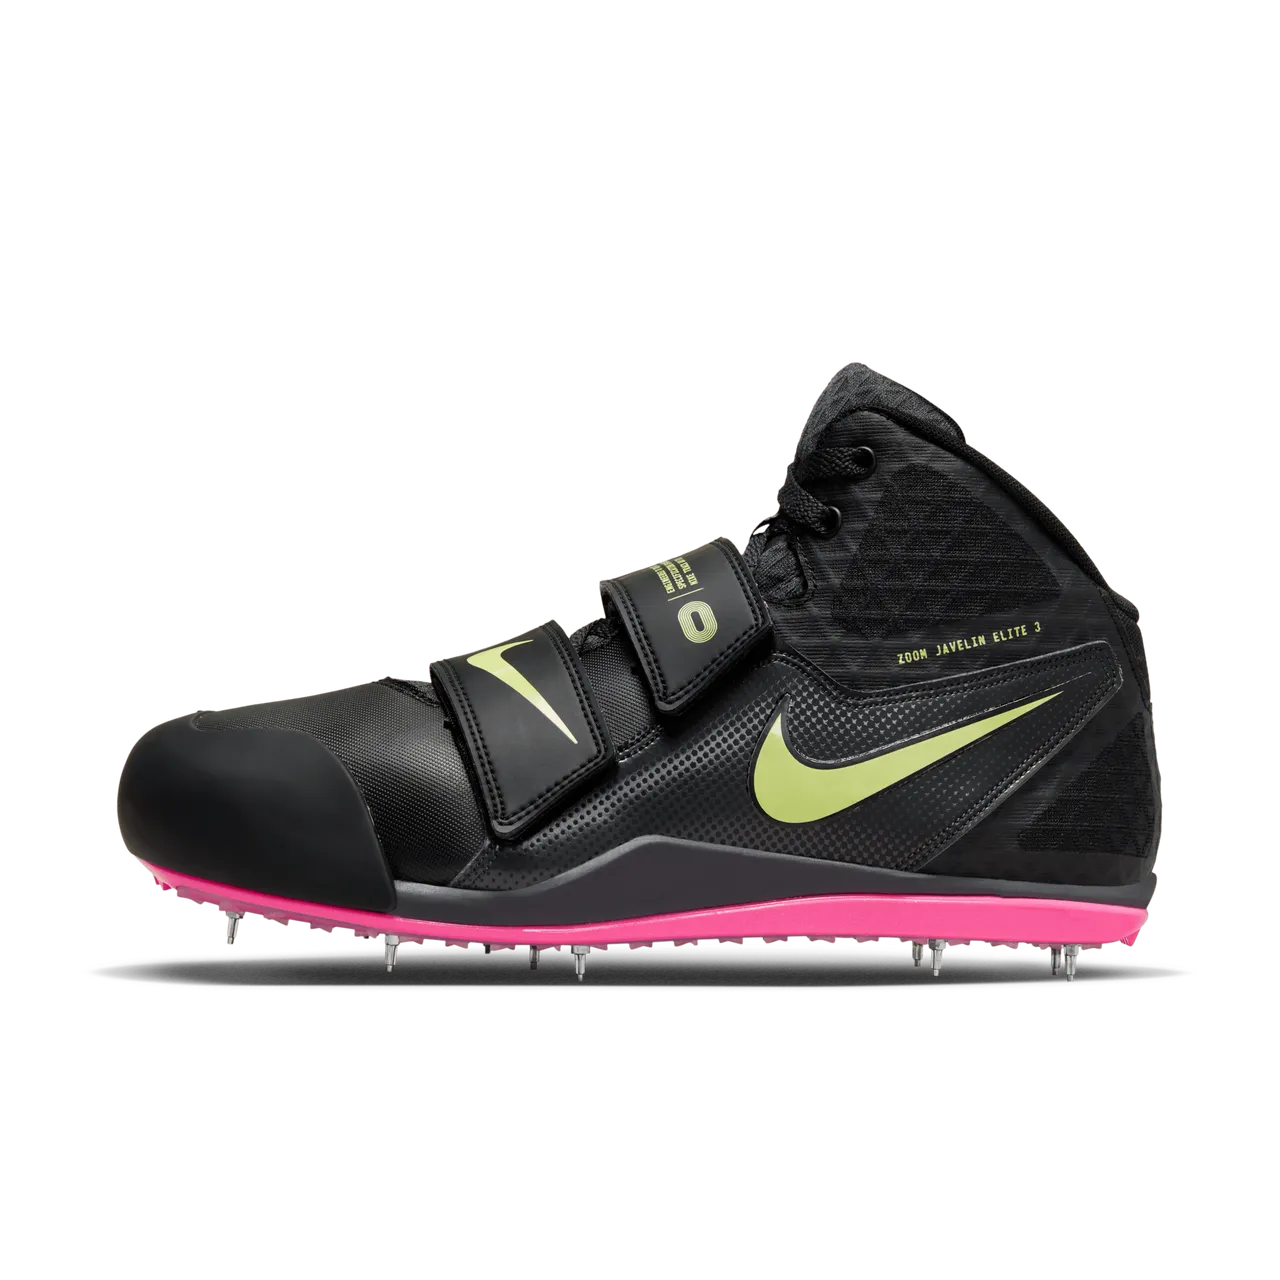 Nike Zoom Javelin Elite 3 Leichtathletik-Wurf-Spike - Schwarz